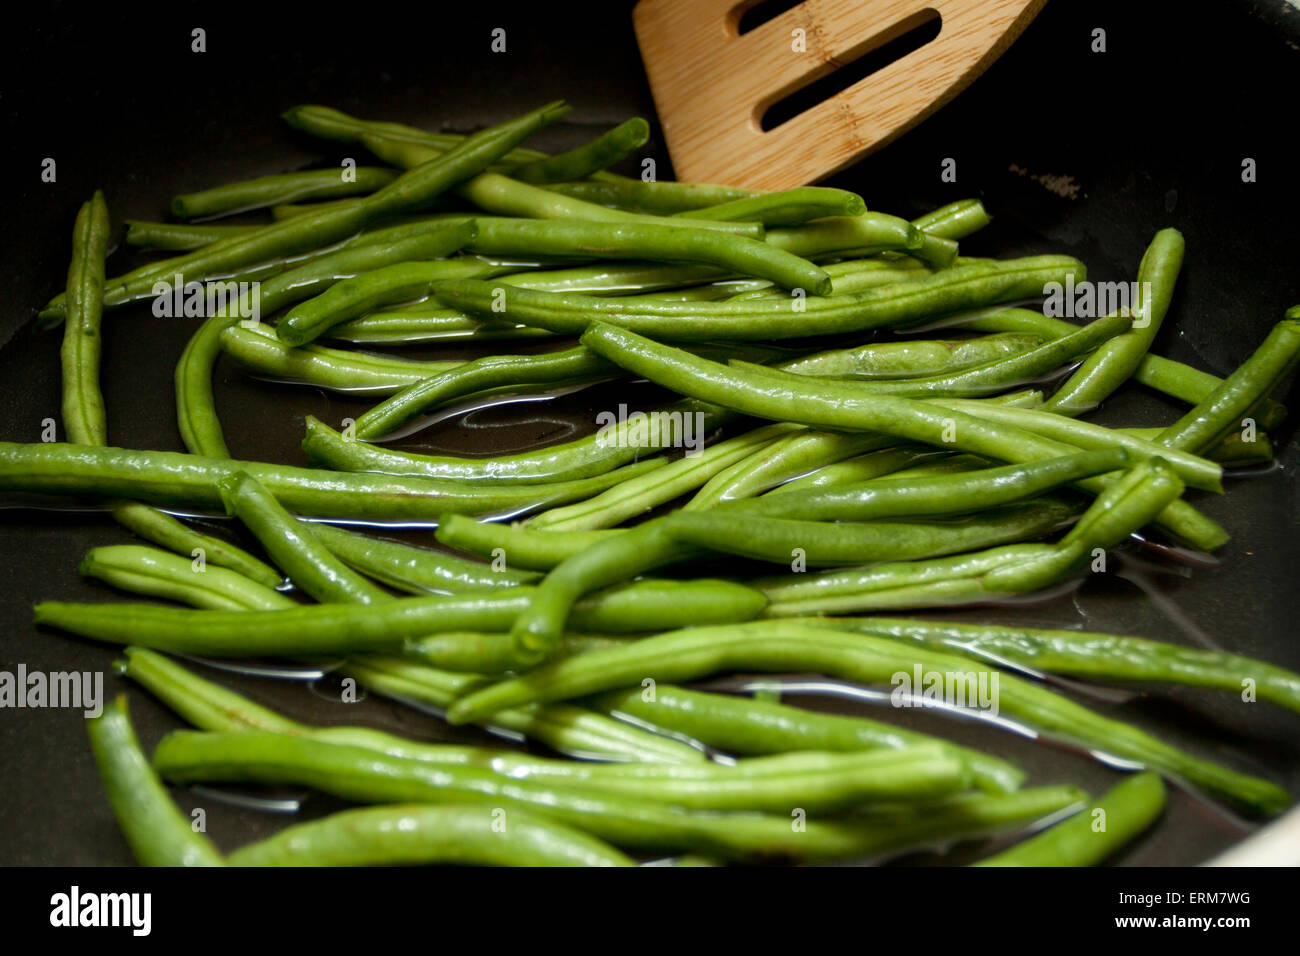 Prepping Ingredients - Sautéing green beans Stock Photo